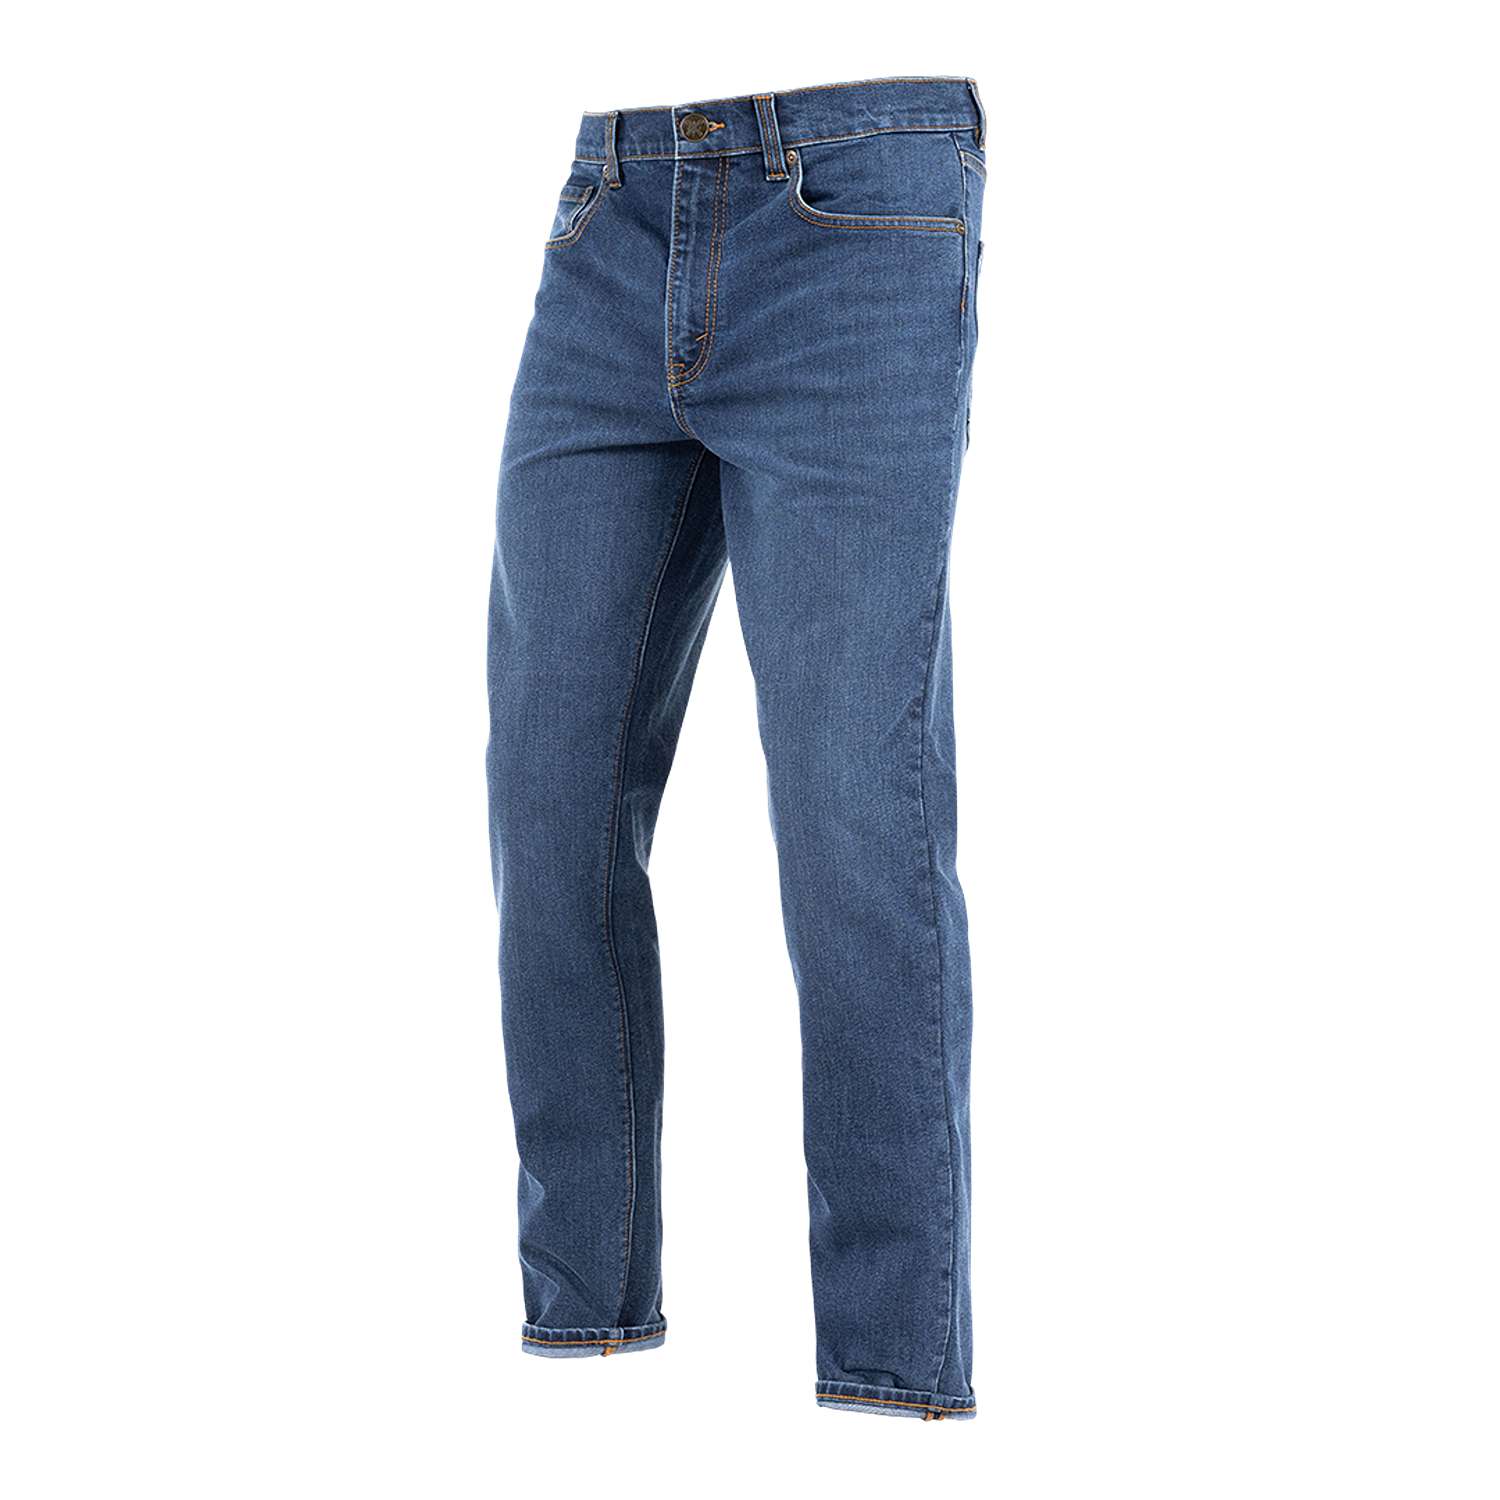 Image of EU John Doe Classic Tapered Jeans Indigo Taille W34/L32